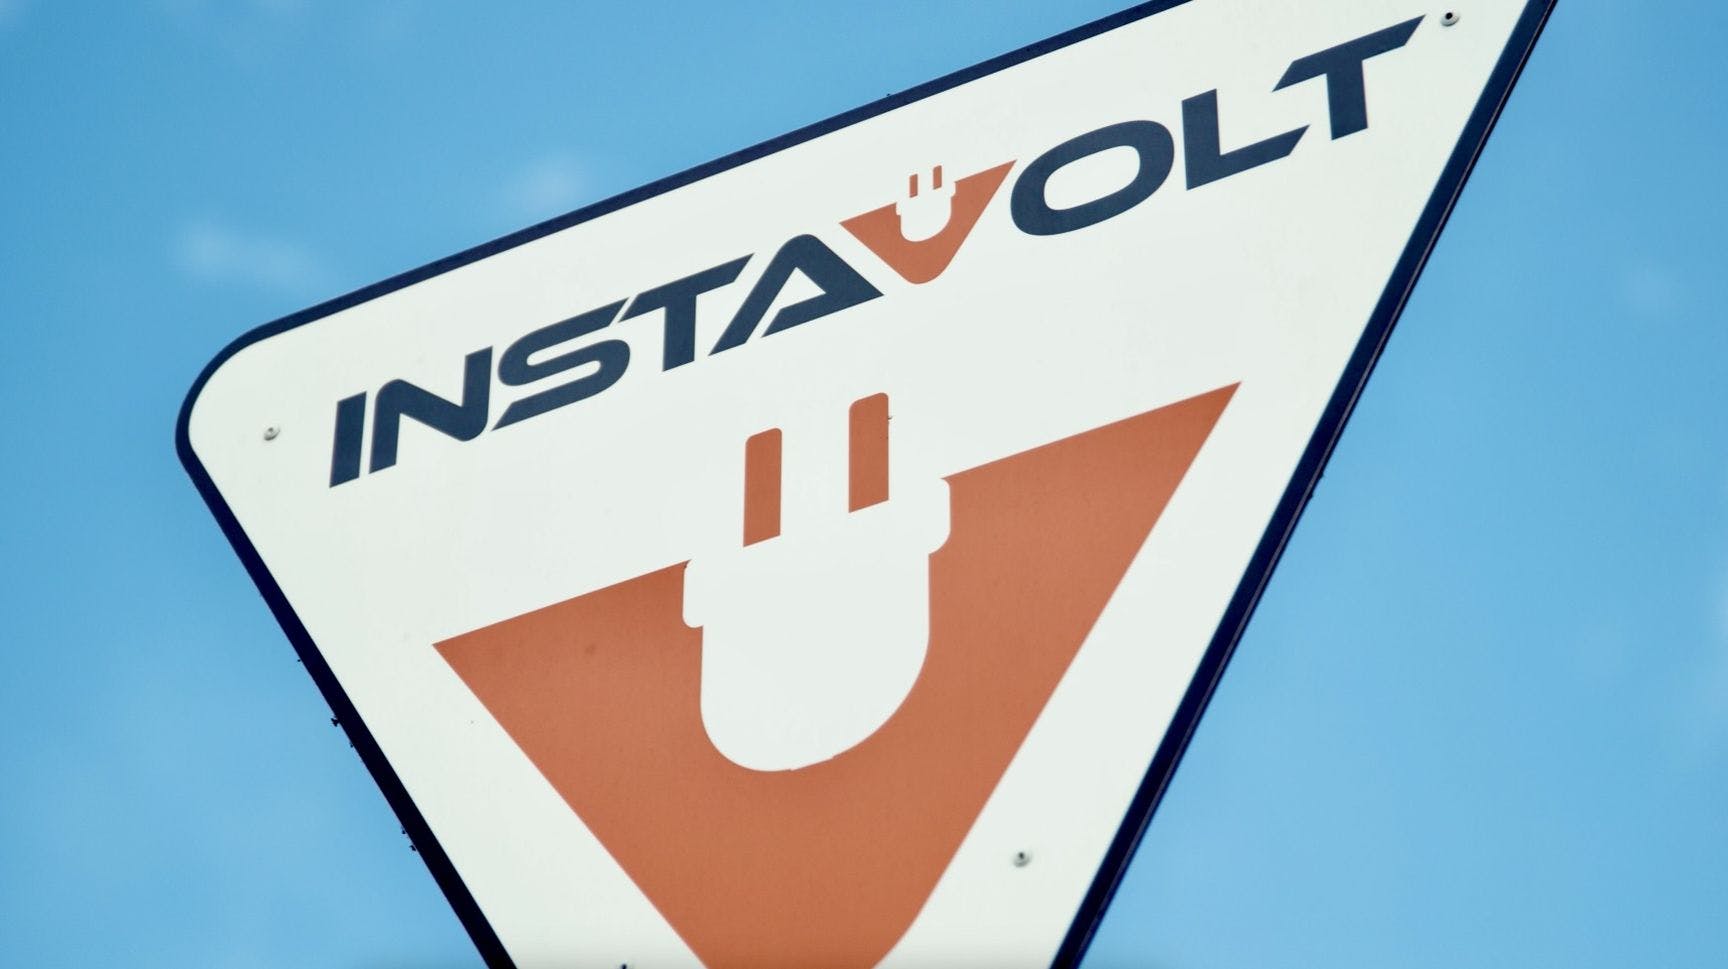 InstaVolt logo on a sign post